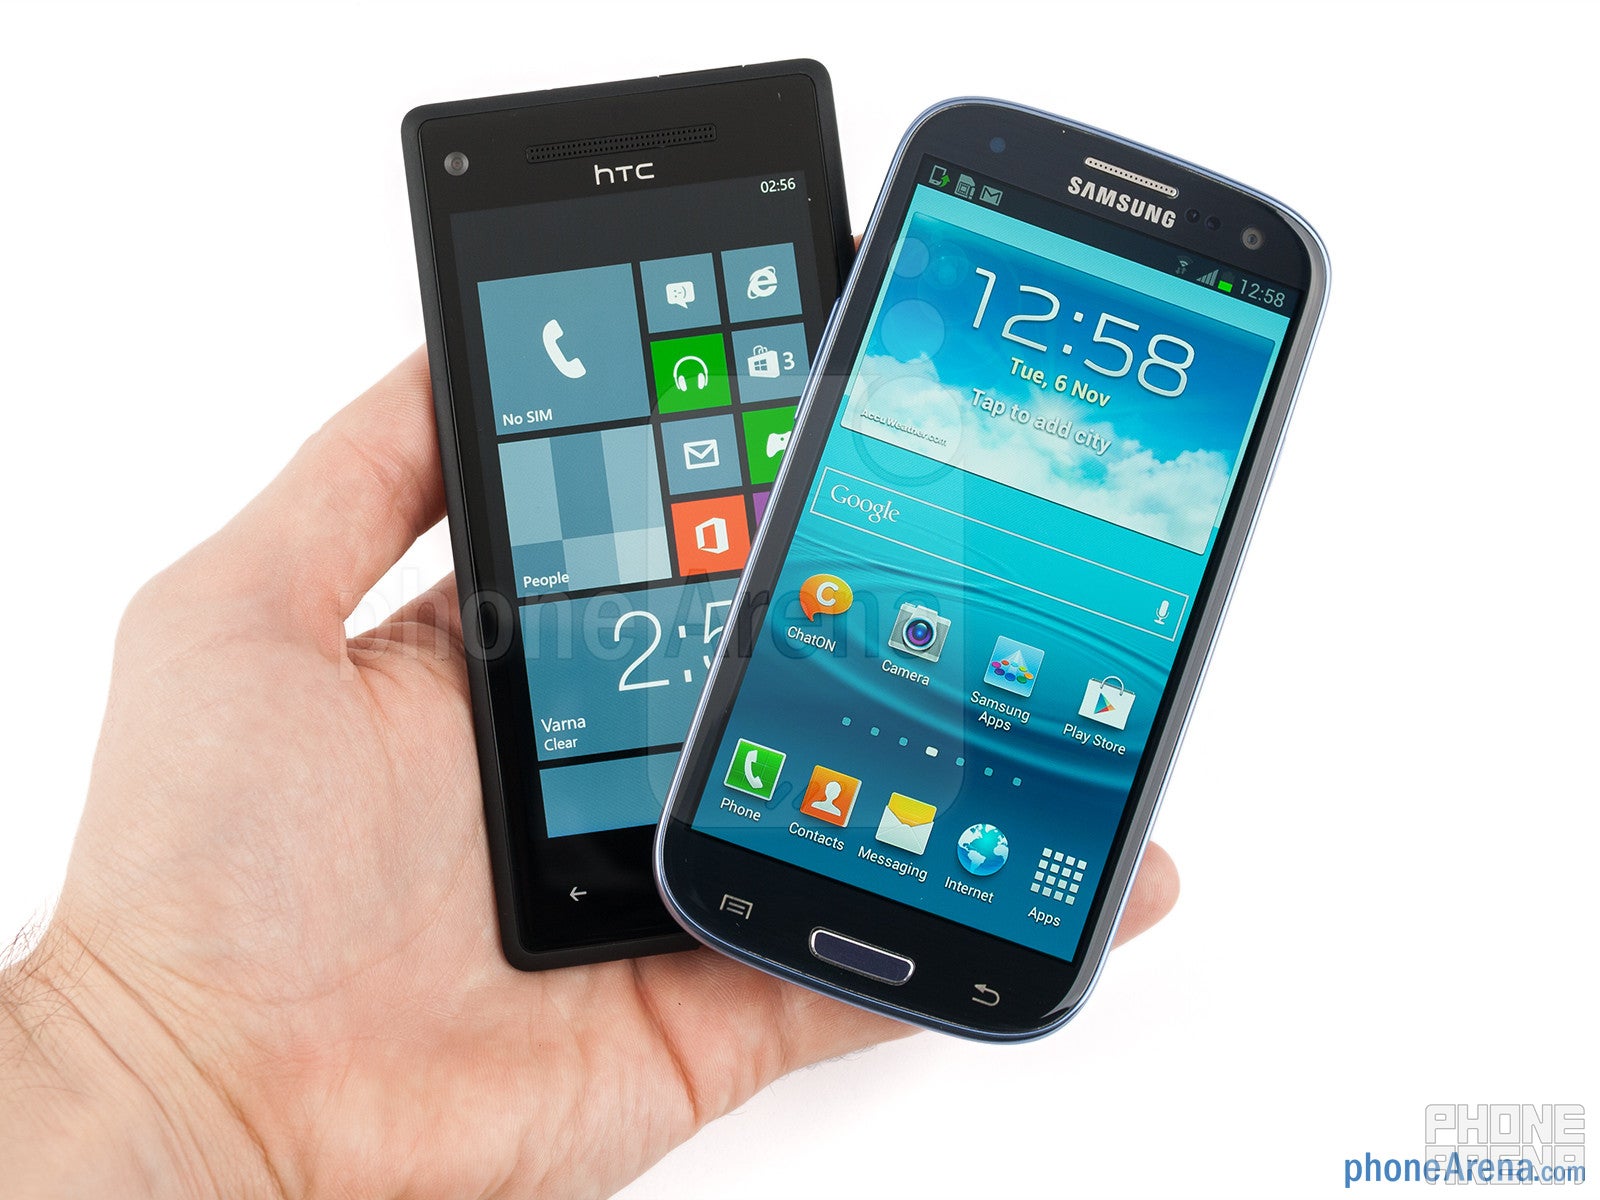 HTC Windows Phone 8X vs Samsung Galaxy S III